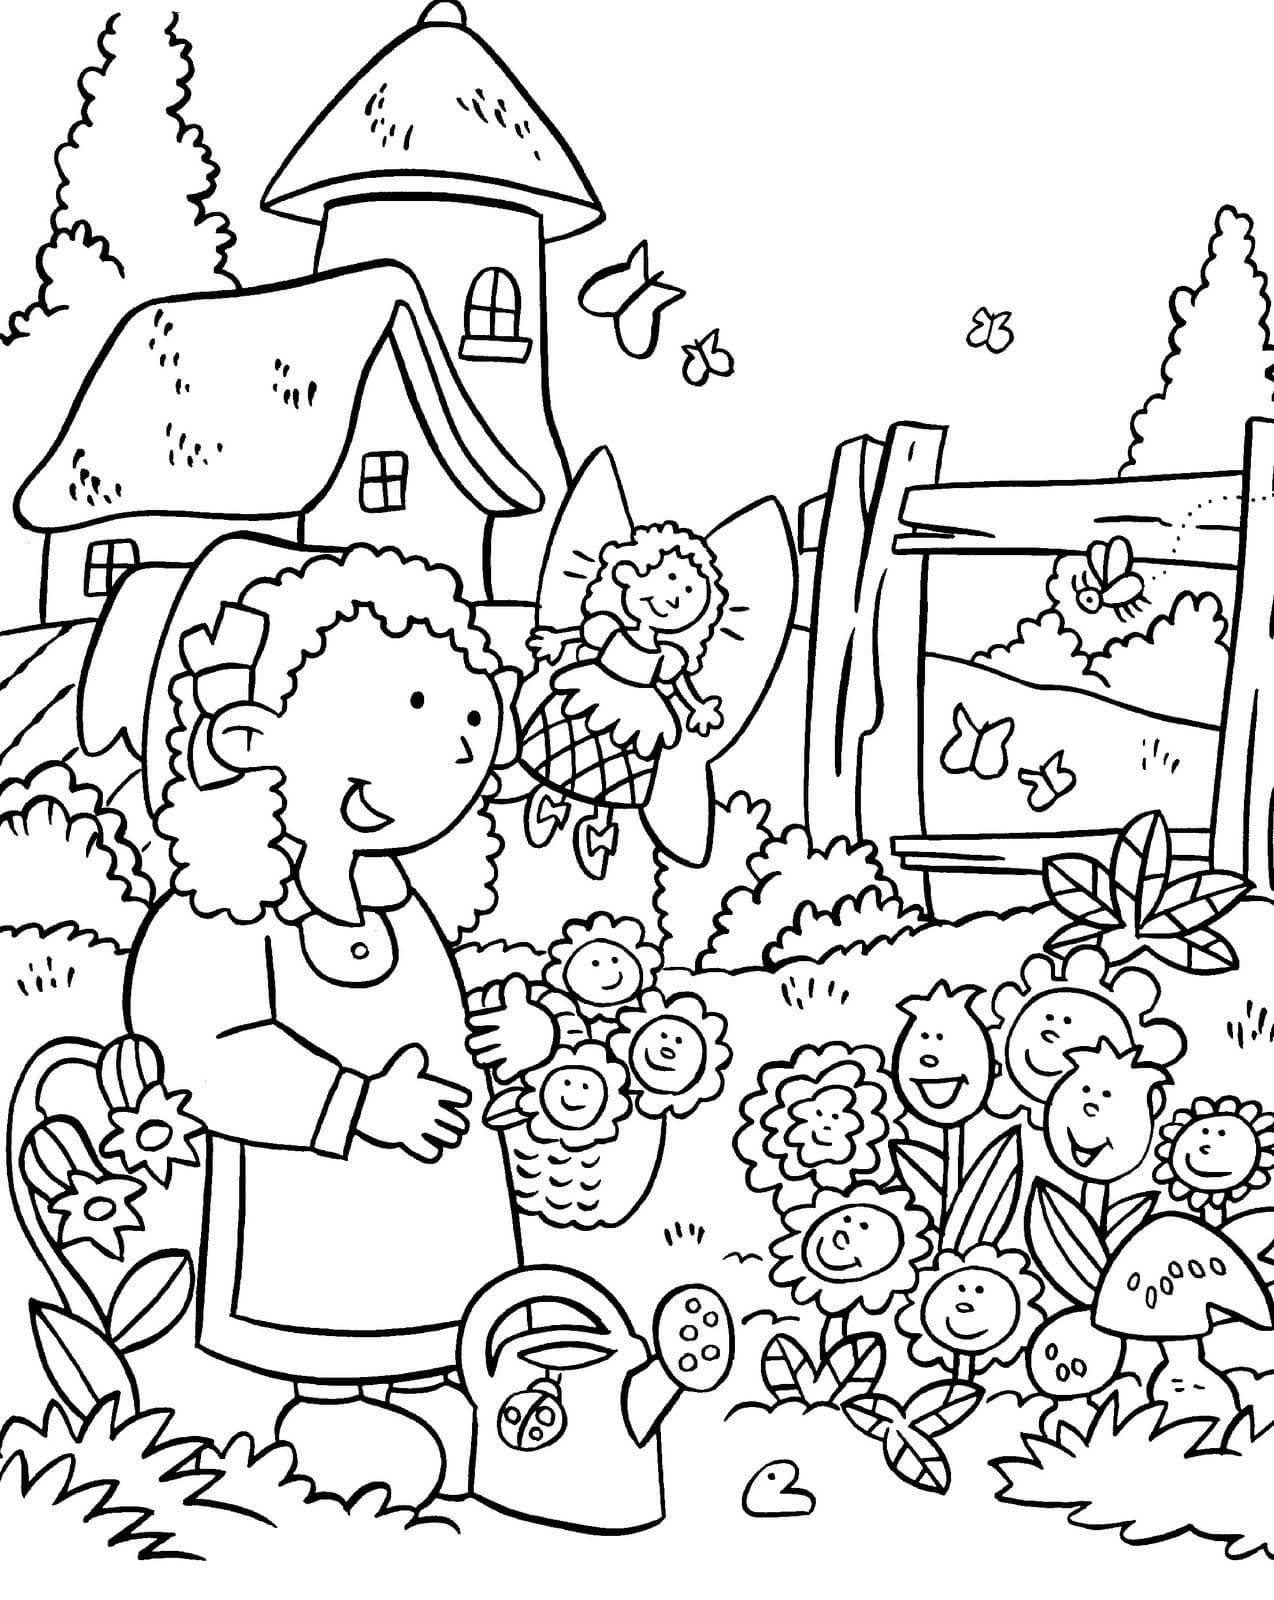 garden coloring pages for preschool